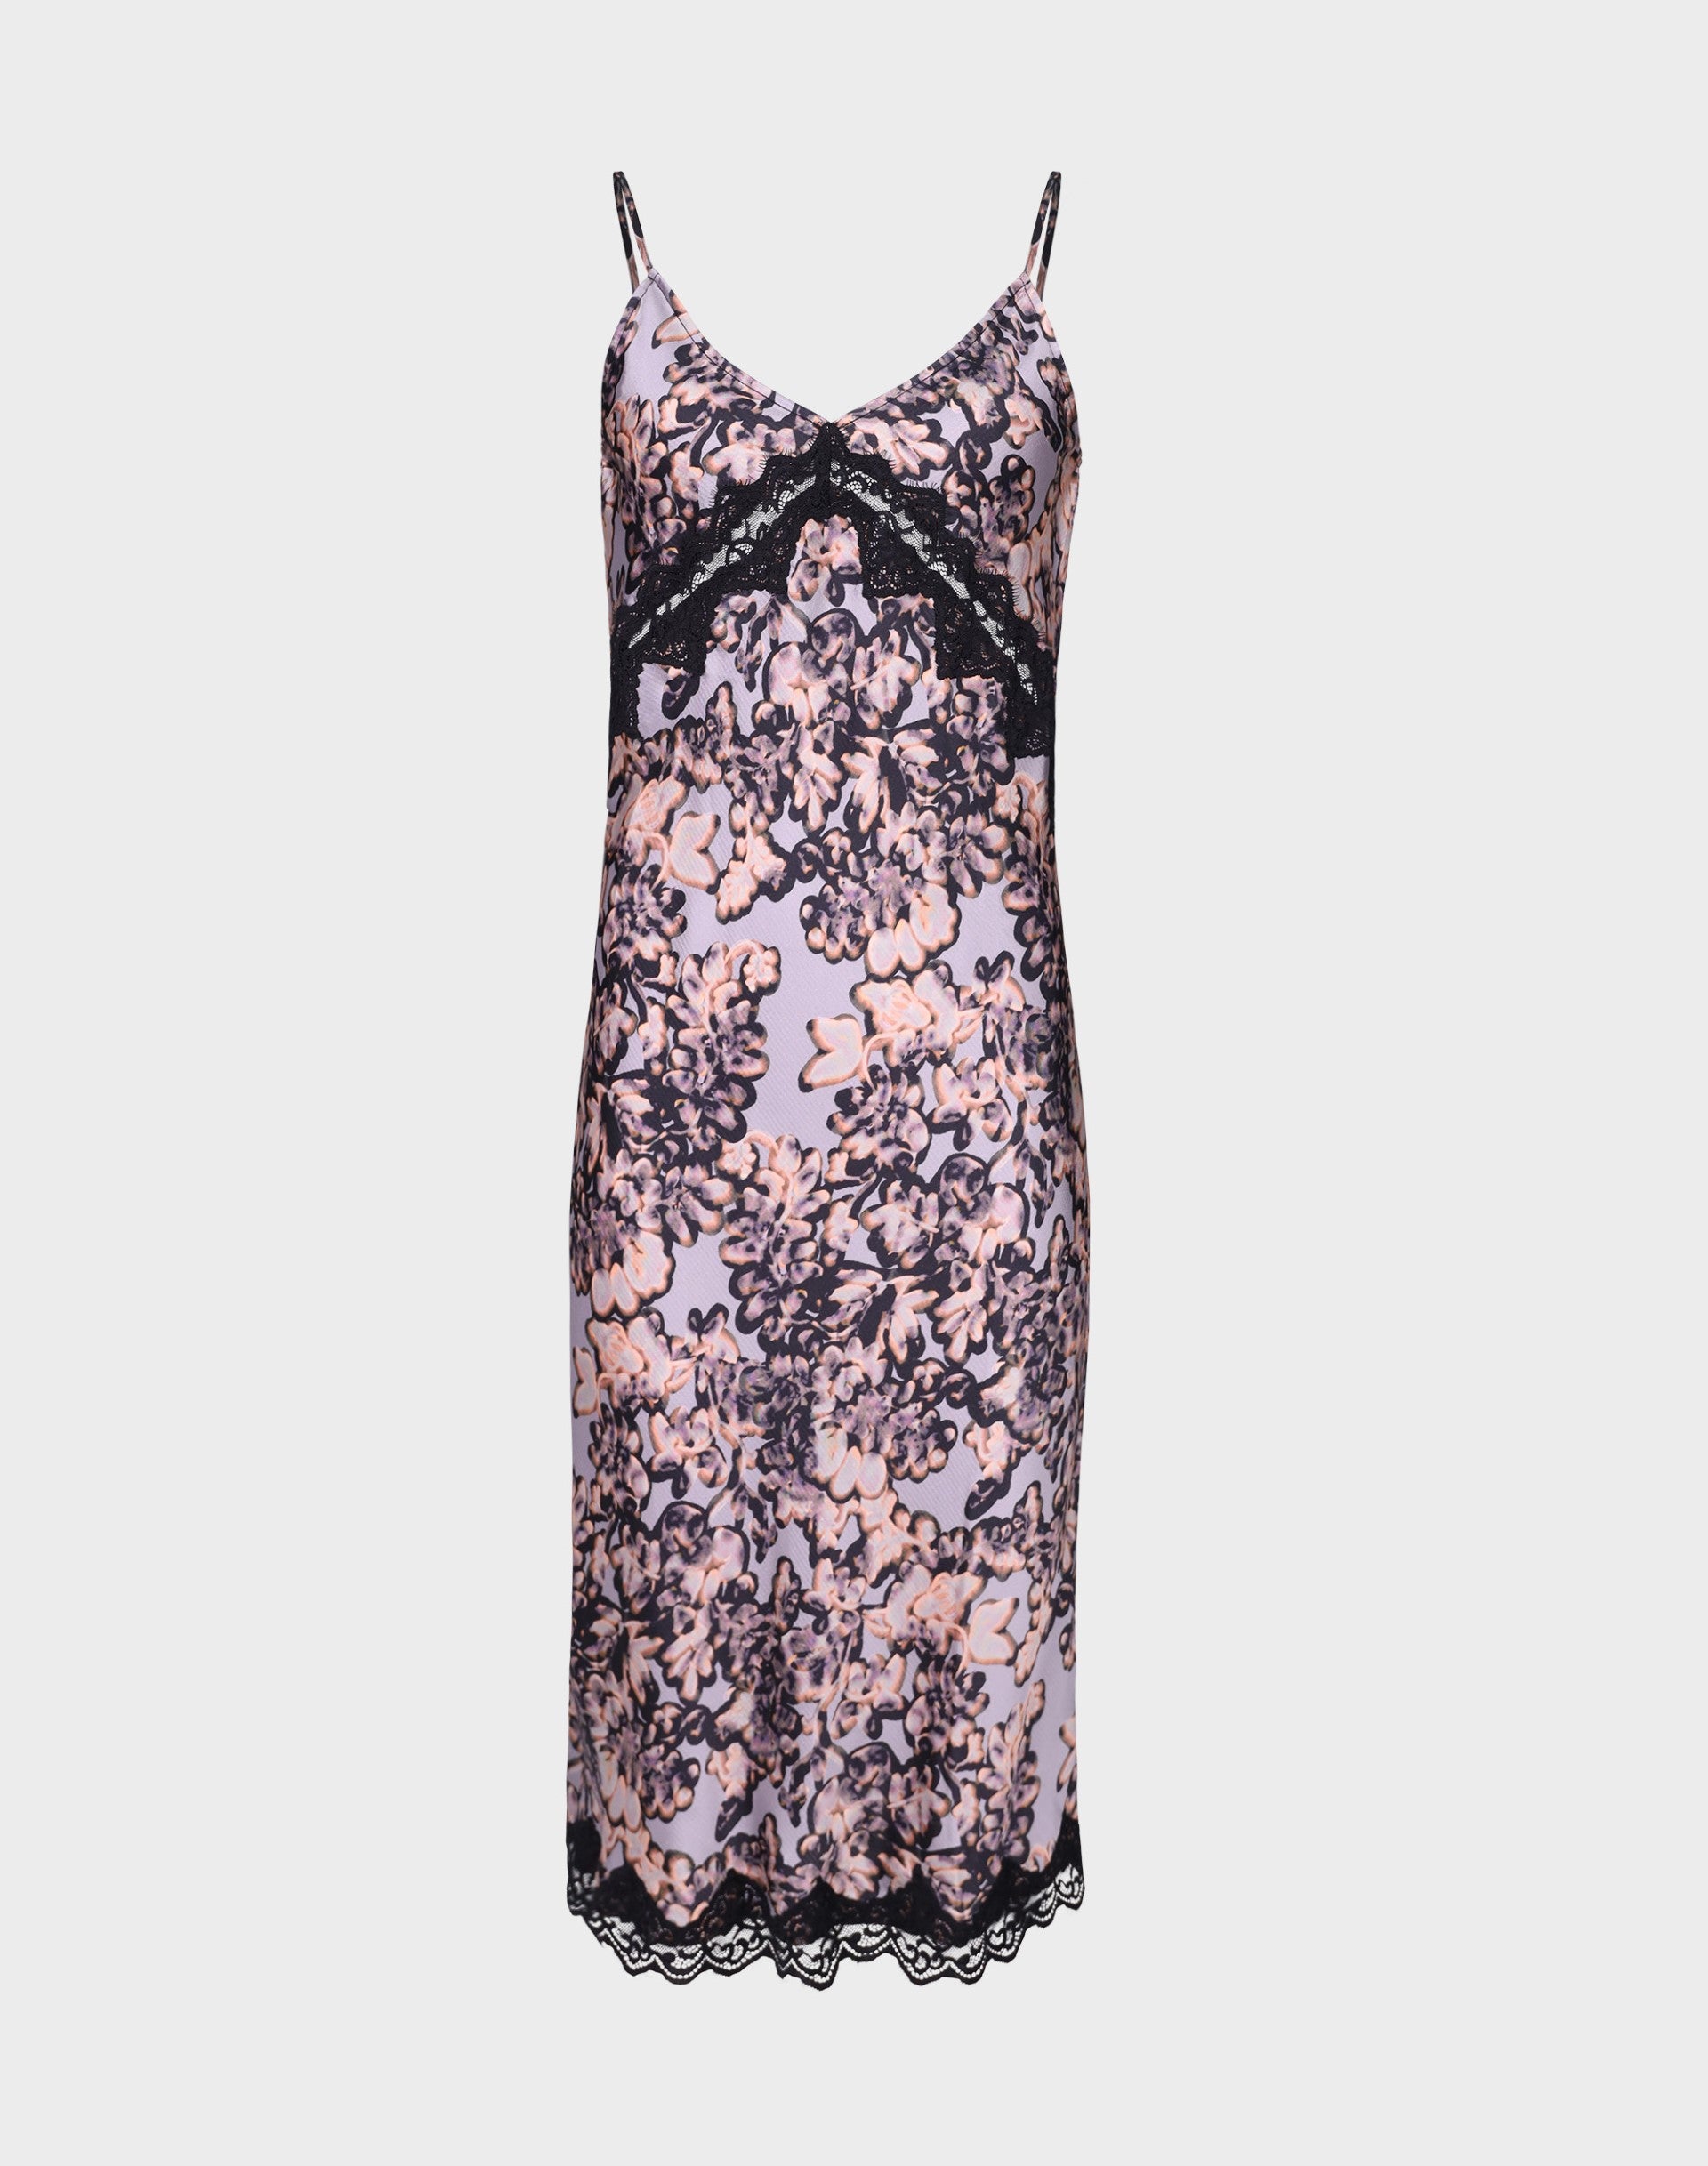 Nightshade Print Dress - Multi - Dresses - Long - Women's Clothing - Storm